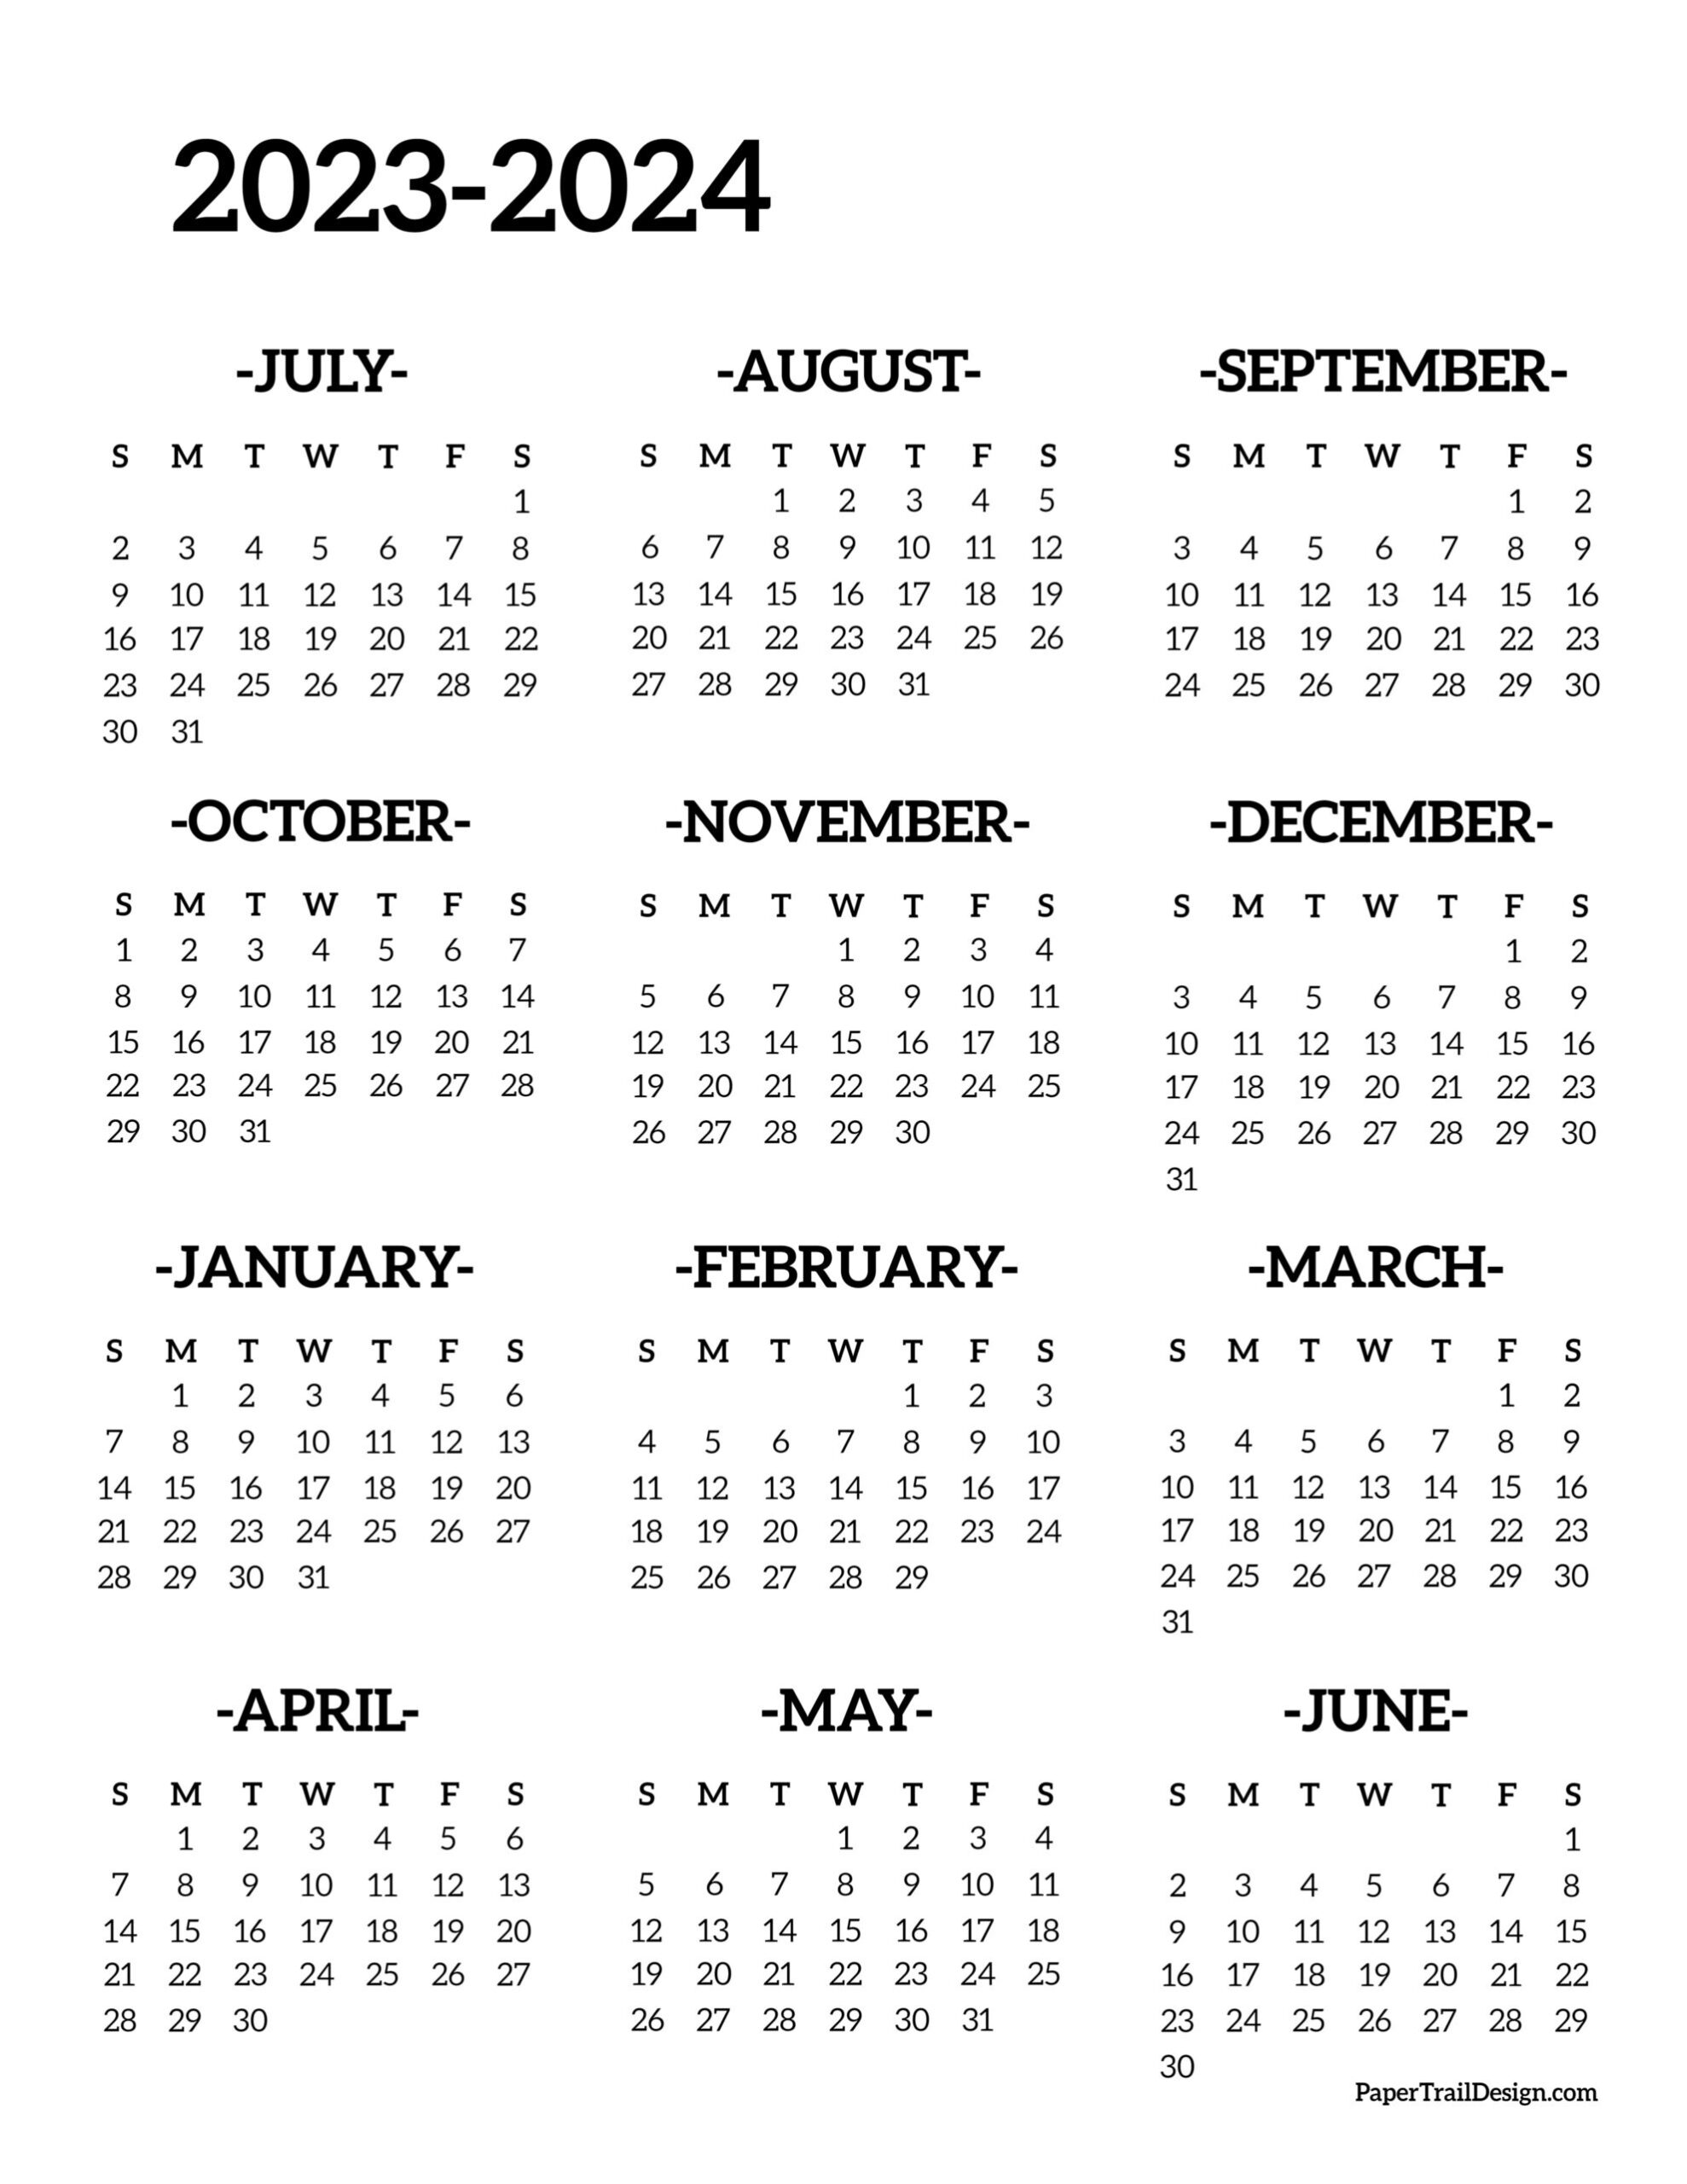 2023-2024 School Year Calendar Free Printable - Paper Trail Design in July 2023- June 2024 Calendar